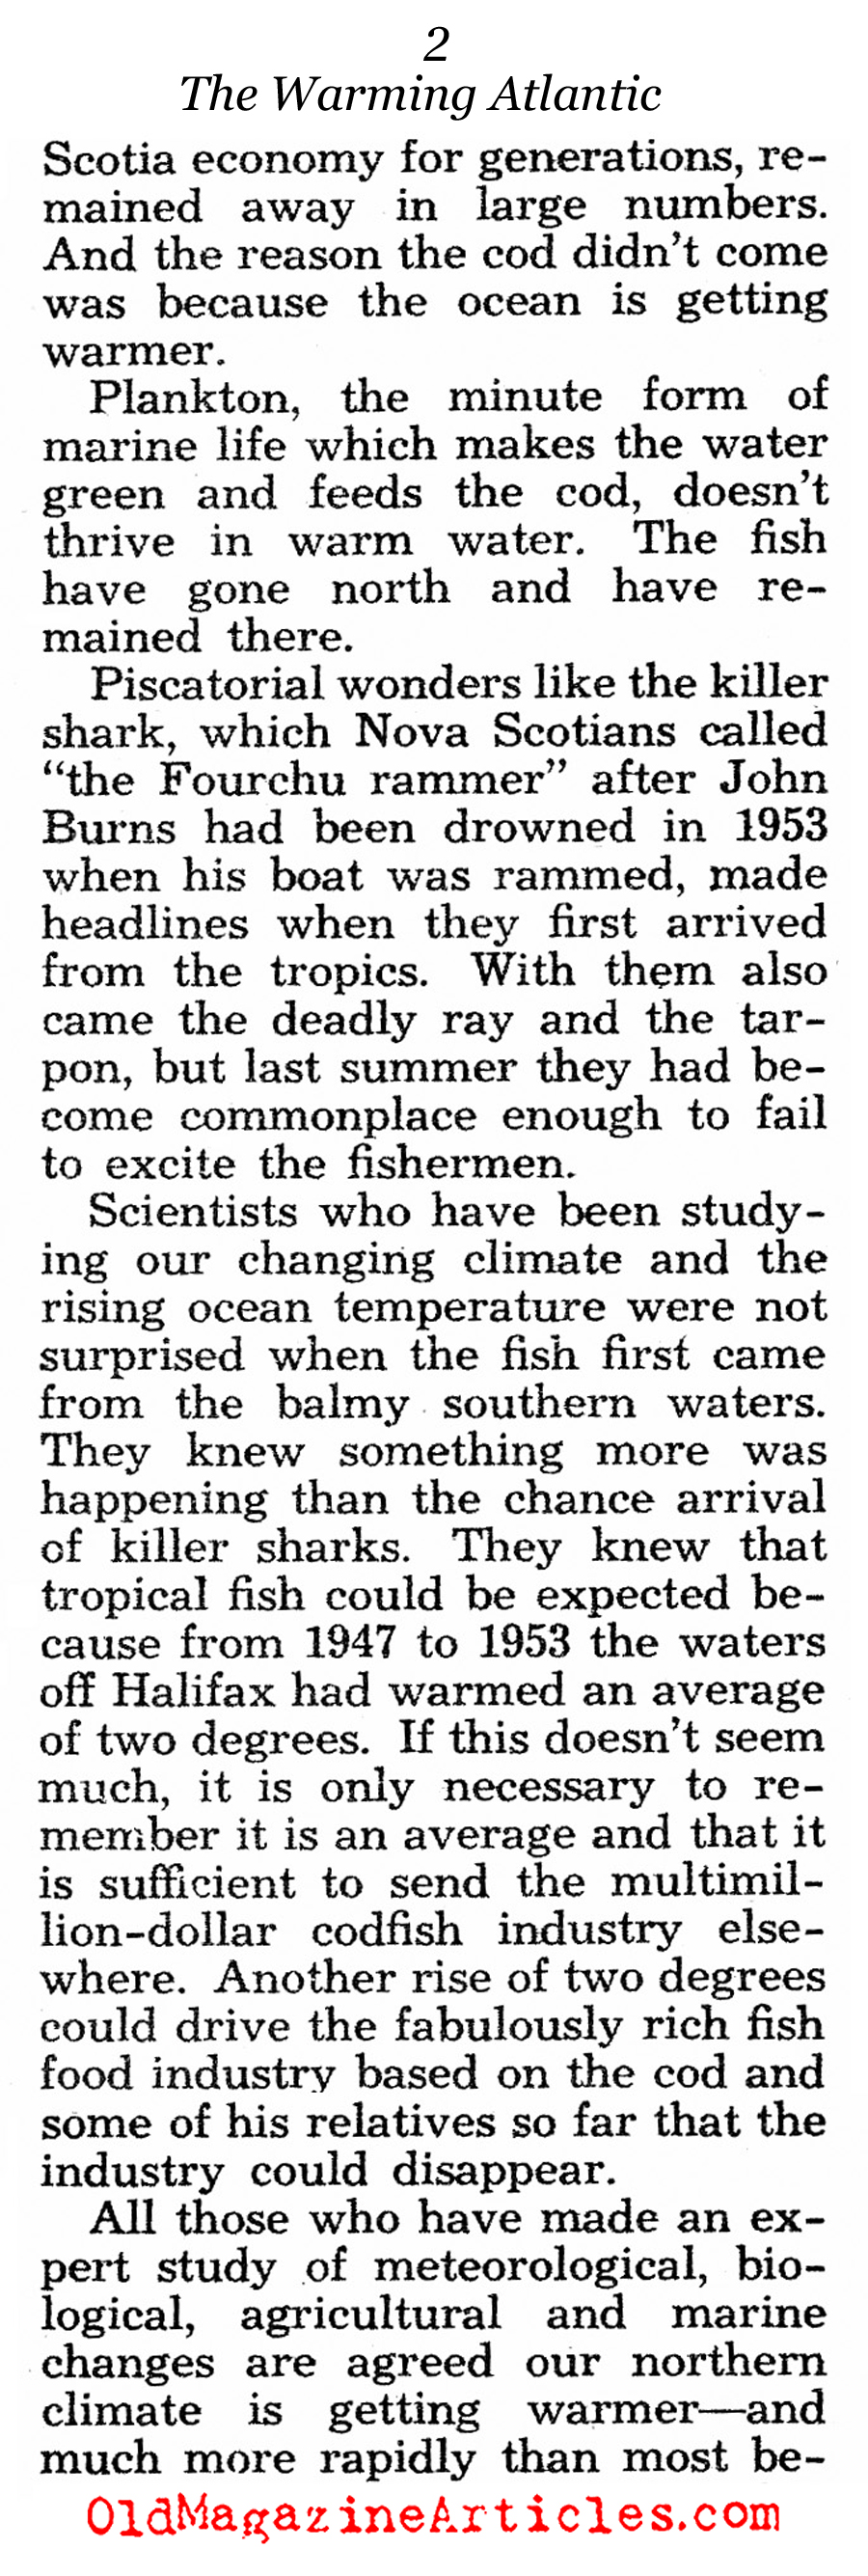 The Atlantic Heats Up (Pic Magazine, 1955)